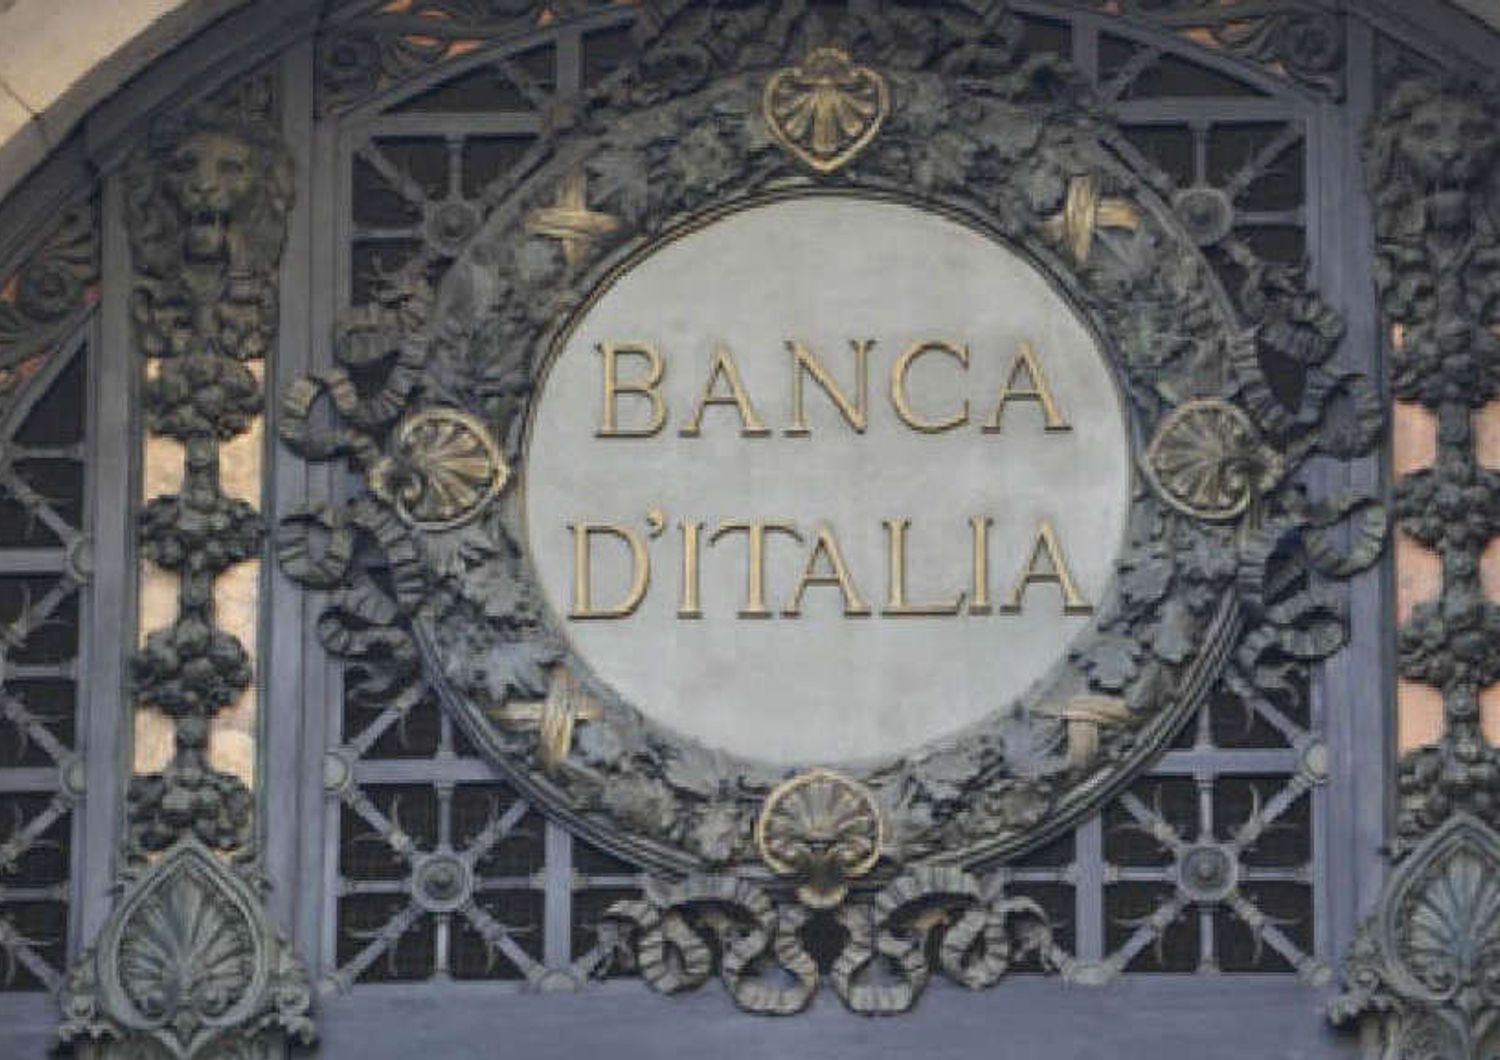 Public debt hits record 2. 166bln euros, says Bank of Italy